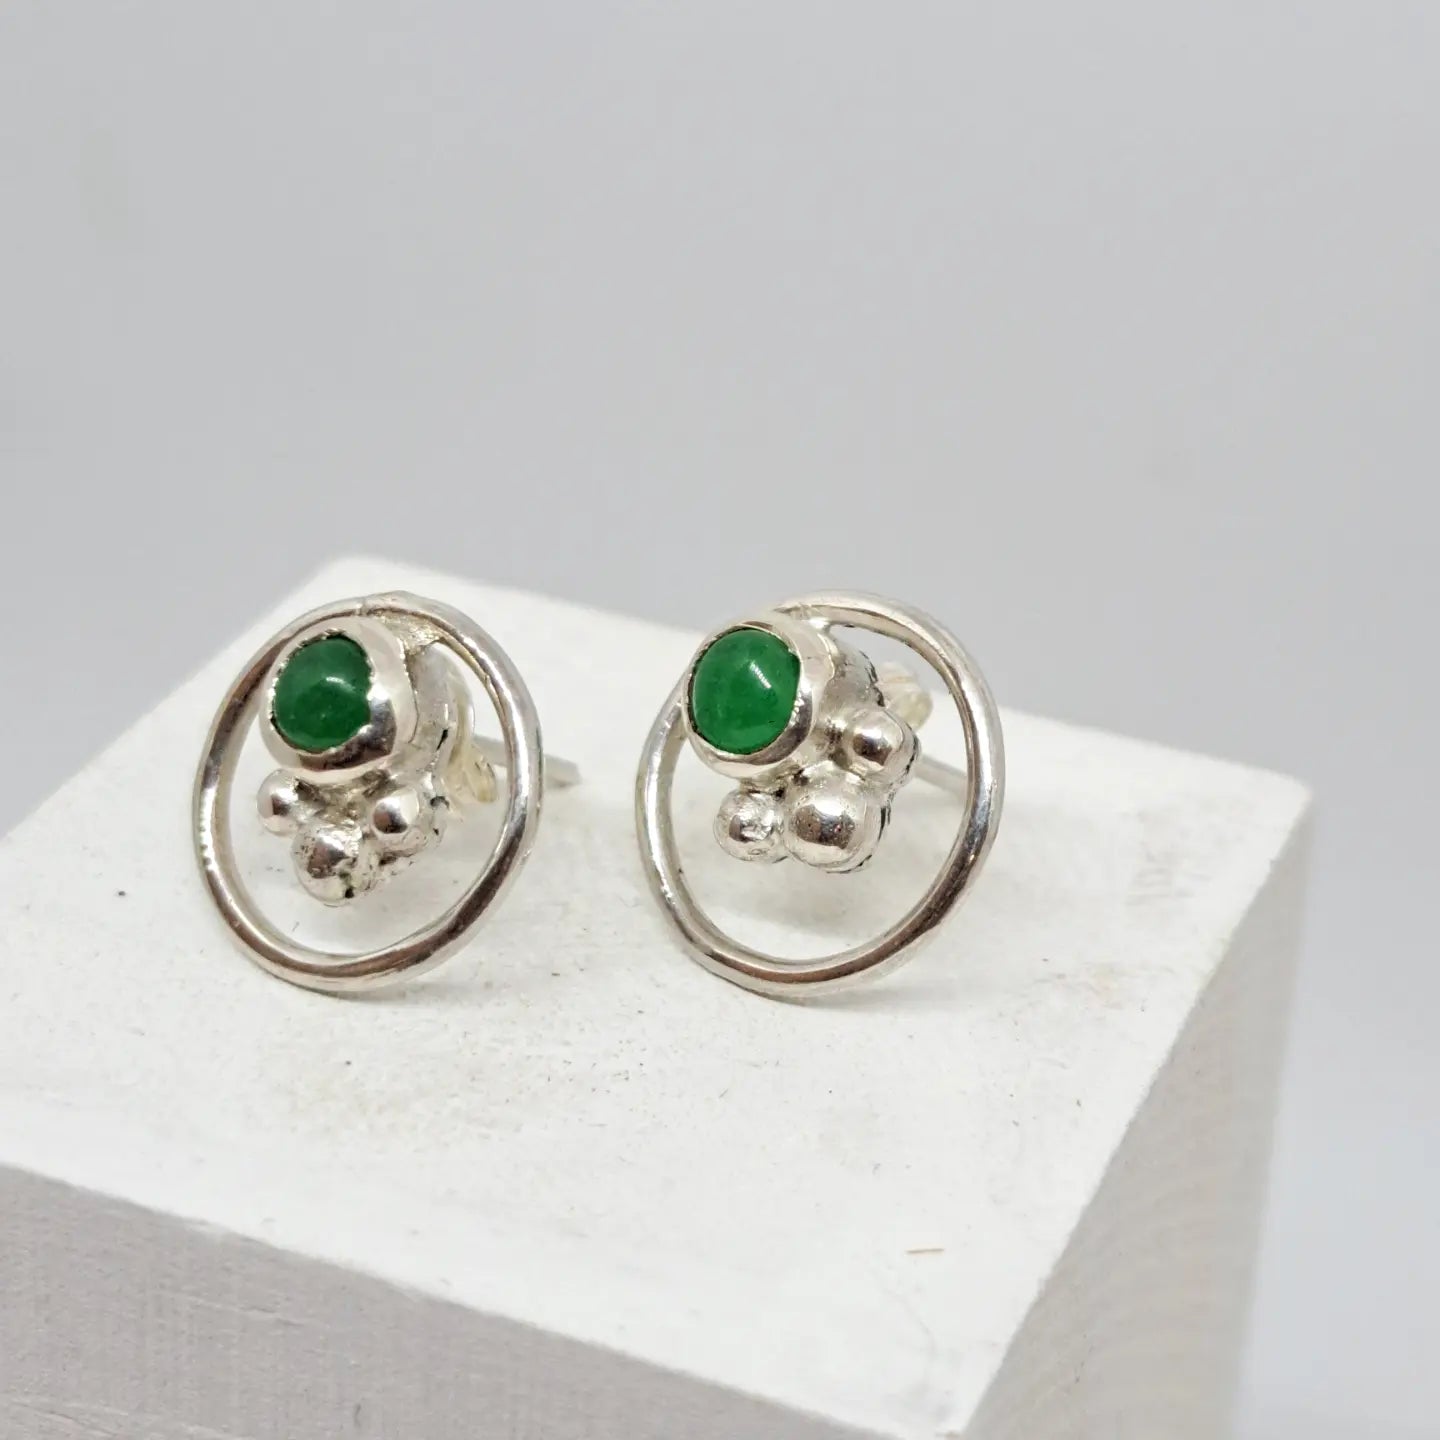 Malay jade and silver stud earrings.